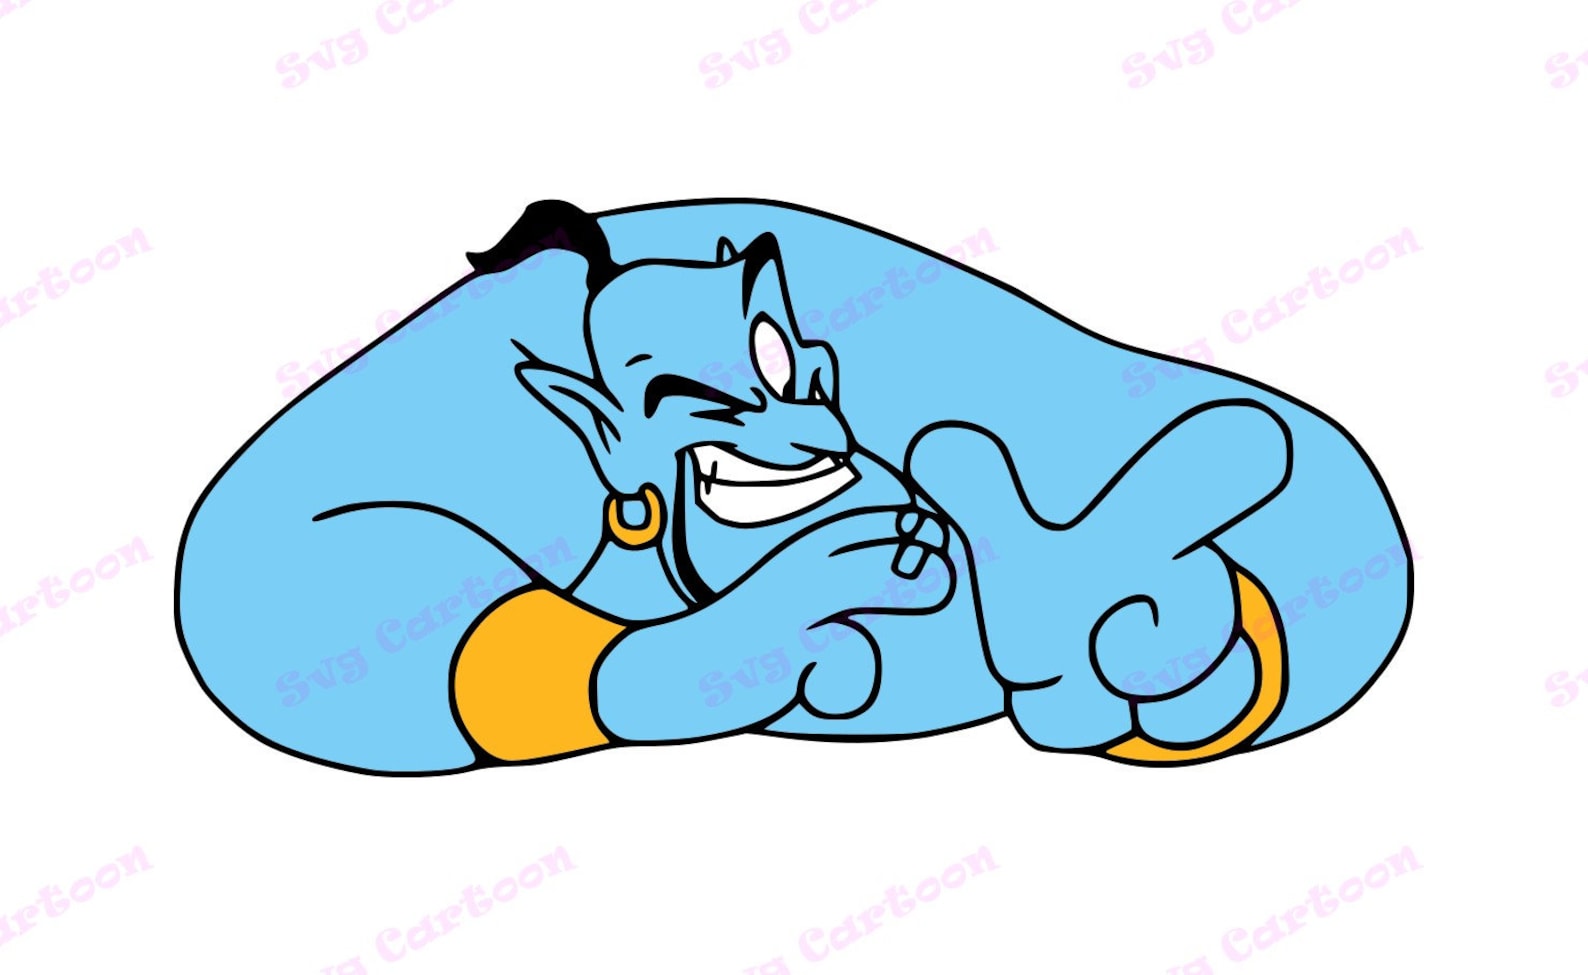 Genie Aladdin SVG 3 Svg Dxf Cricut Silhouette Cut File | Etsy